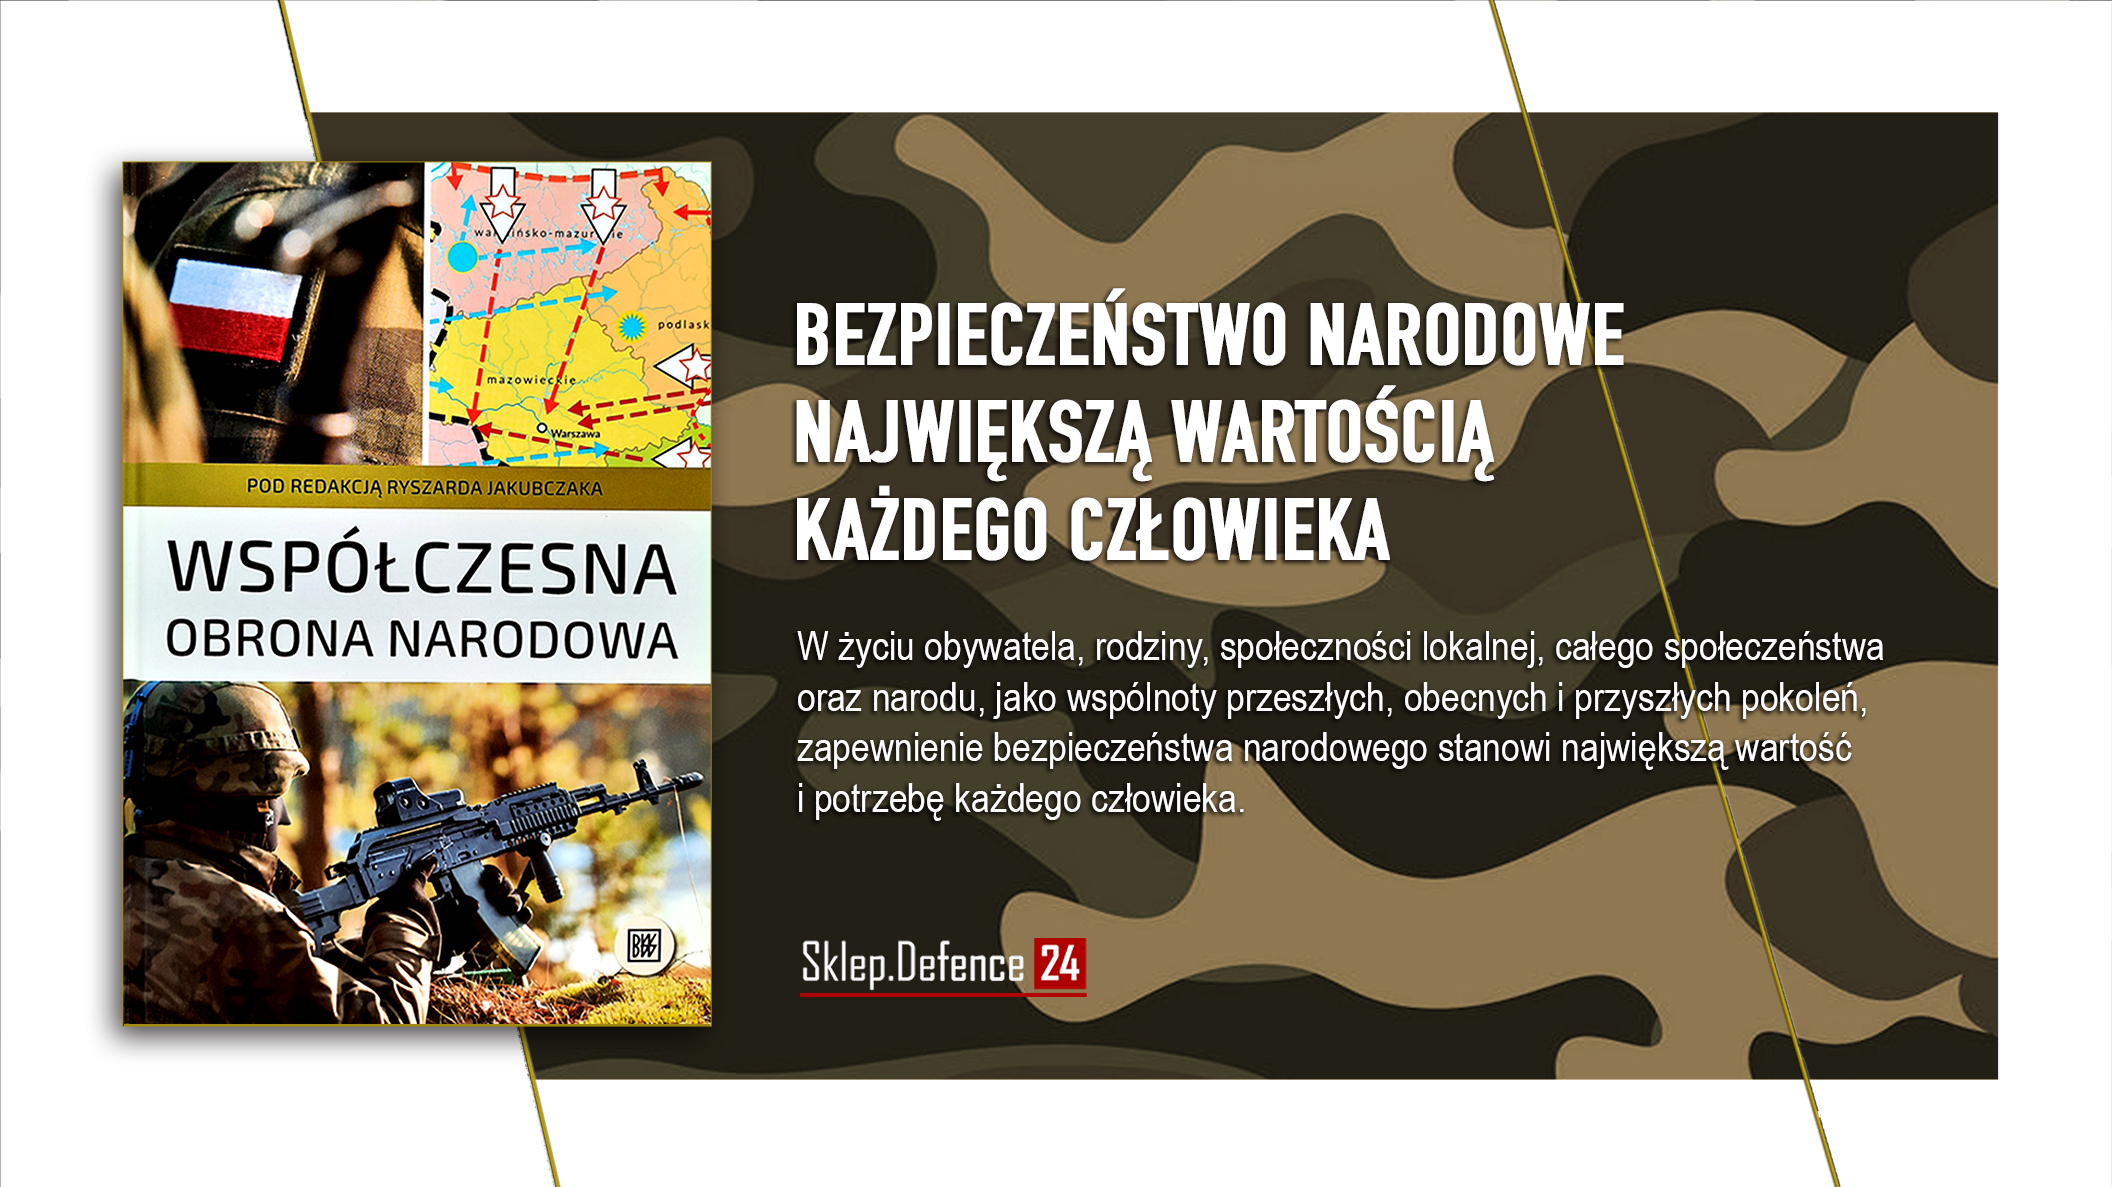 Reklama
Link: https://sklep.defence24.pl/produkt/wspolczesna-obrona-narodowa/